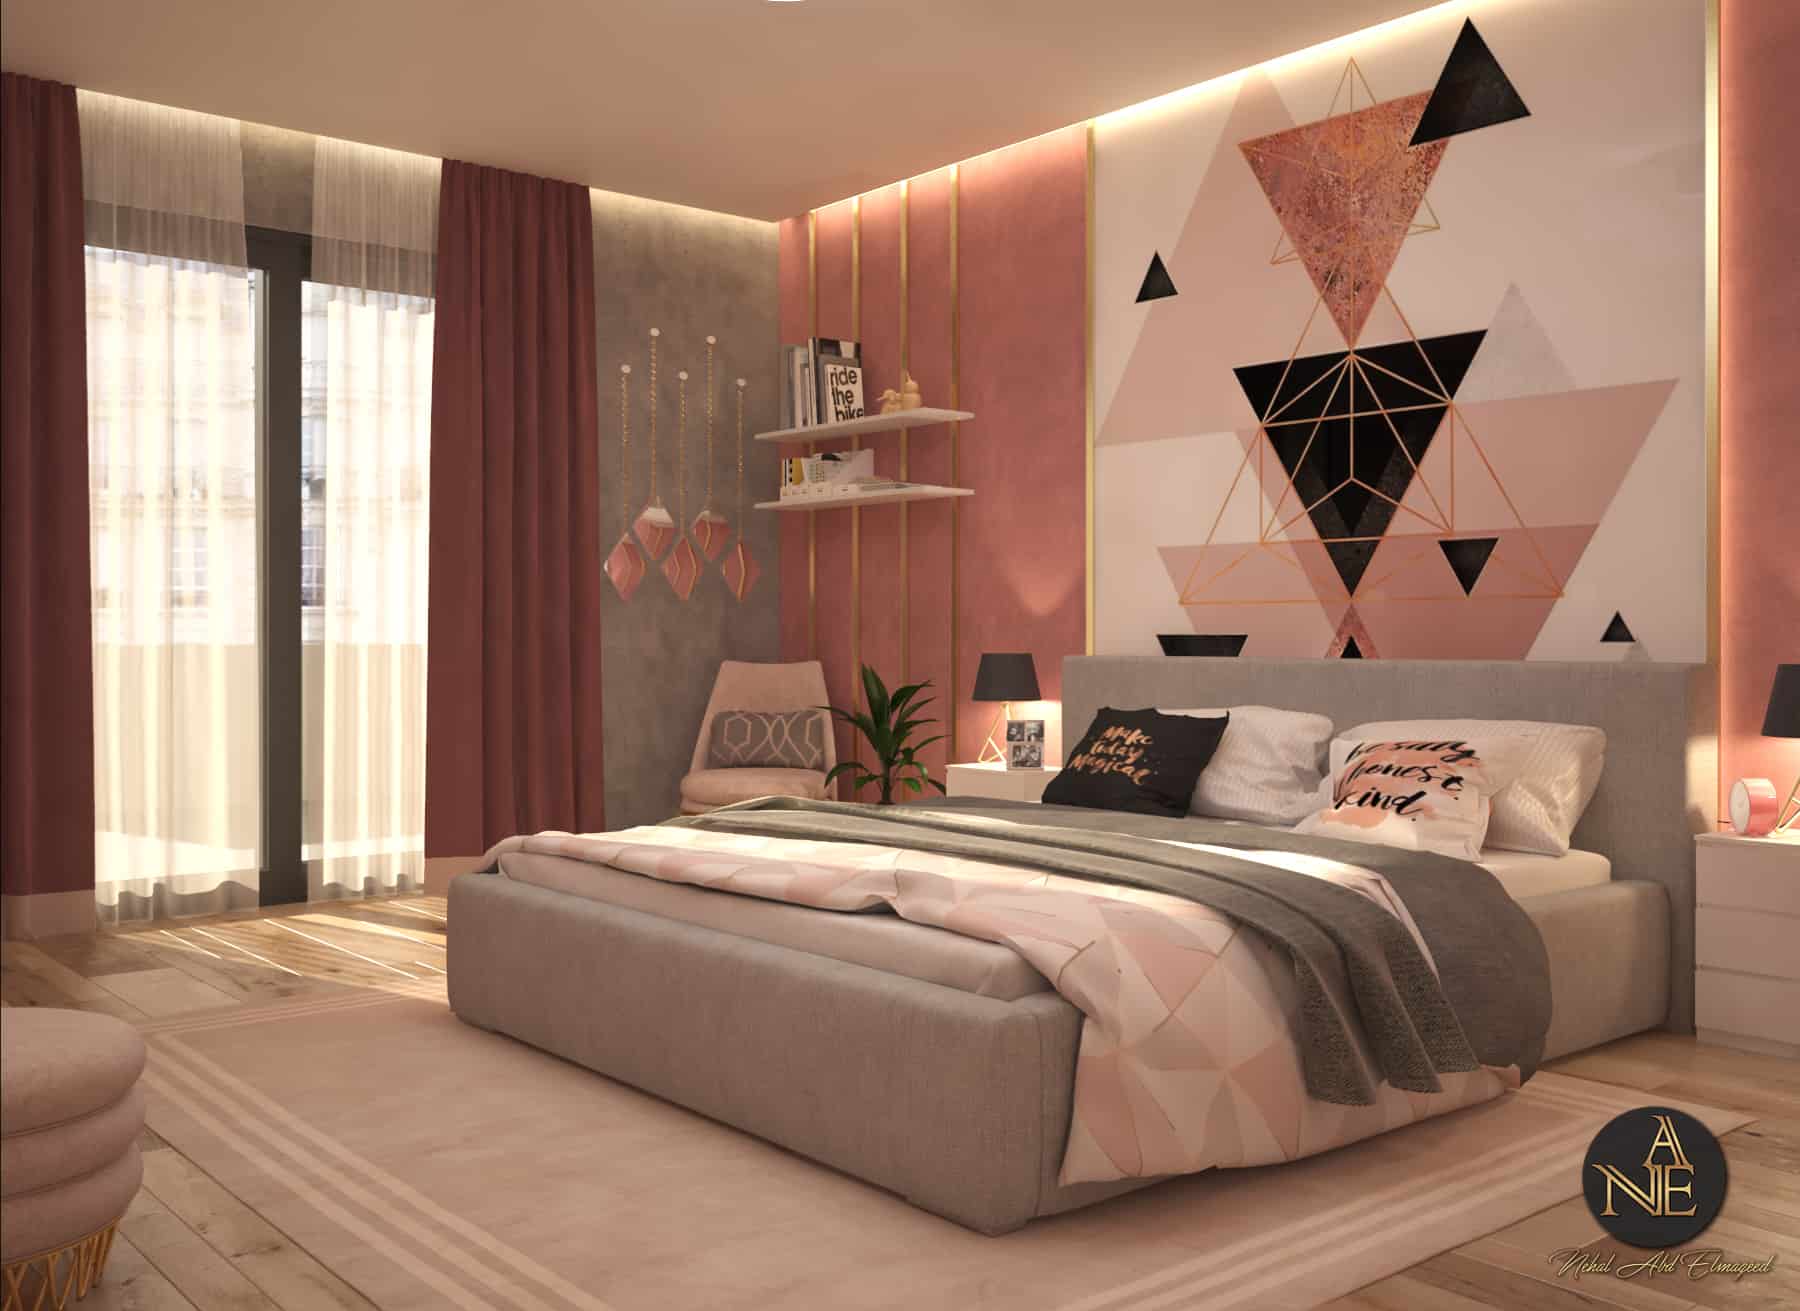 Unique Vs Pink Bedroom Ideas with Simple Decor